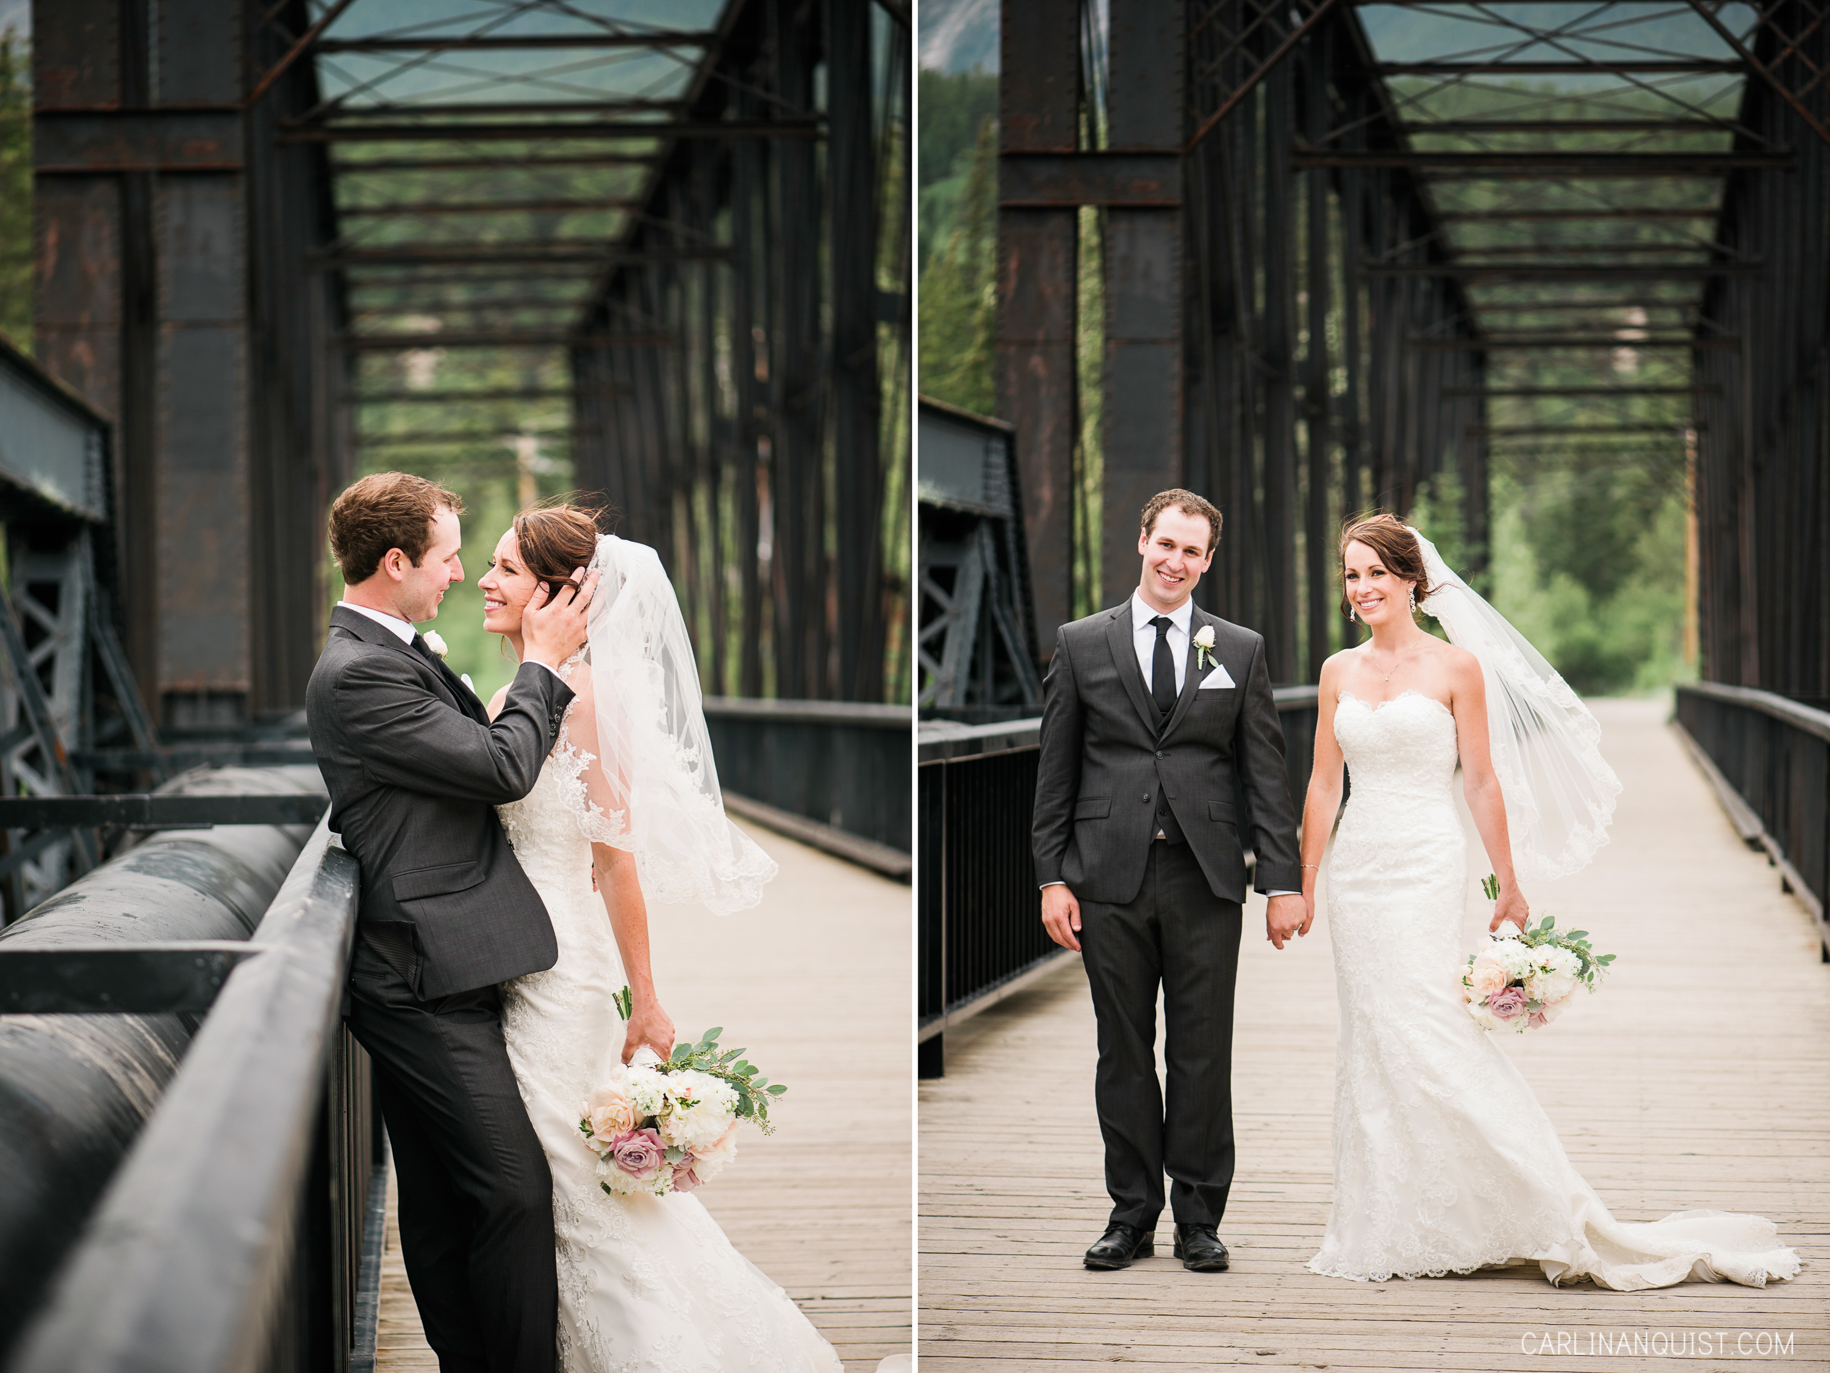 Train Bridge | Canmore Wedding Photographer